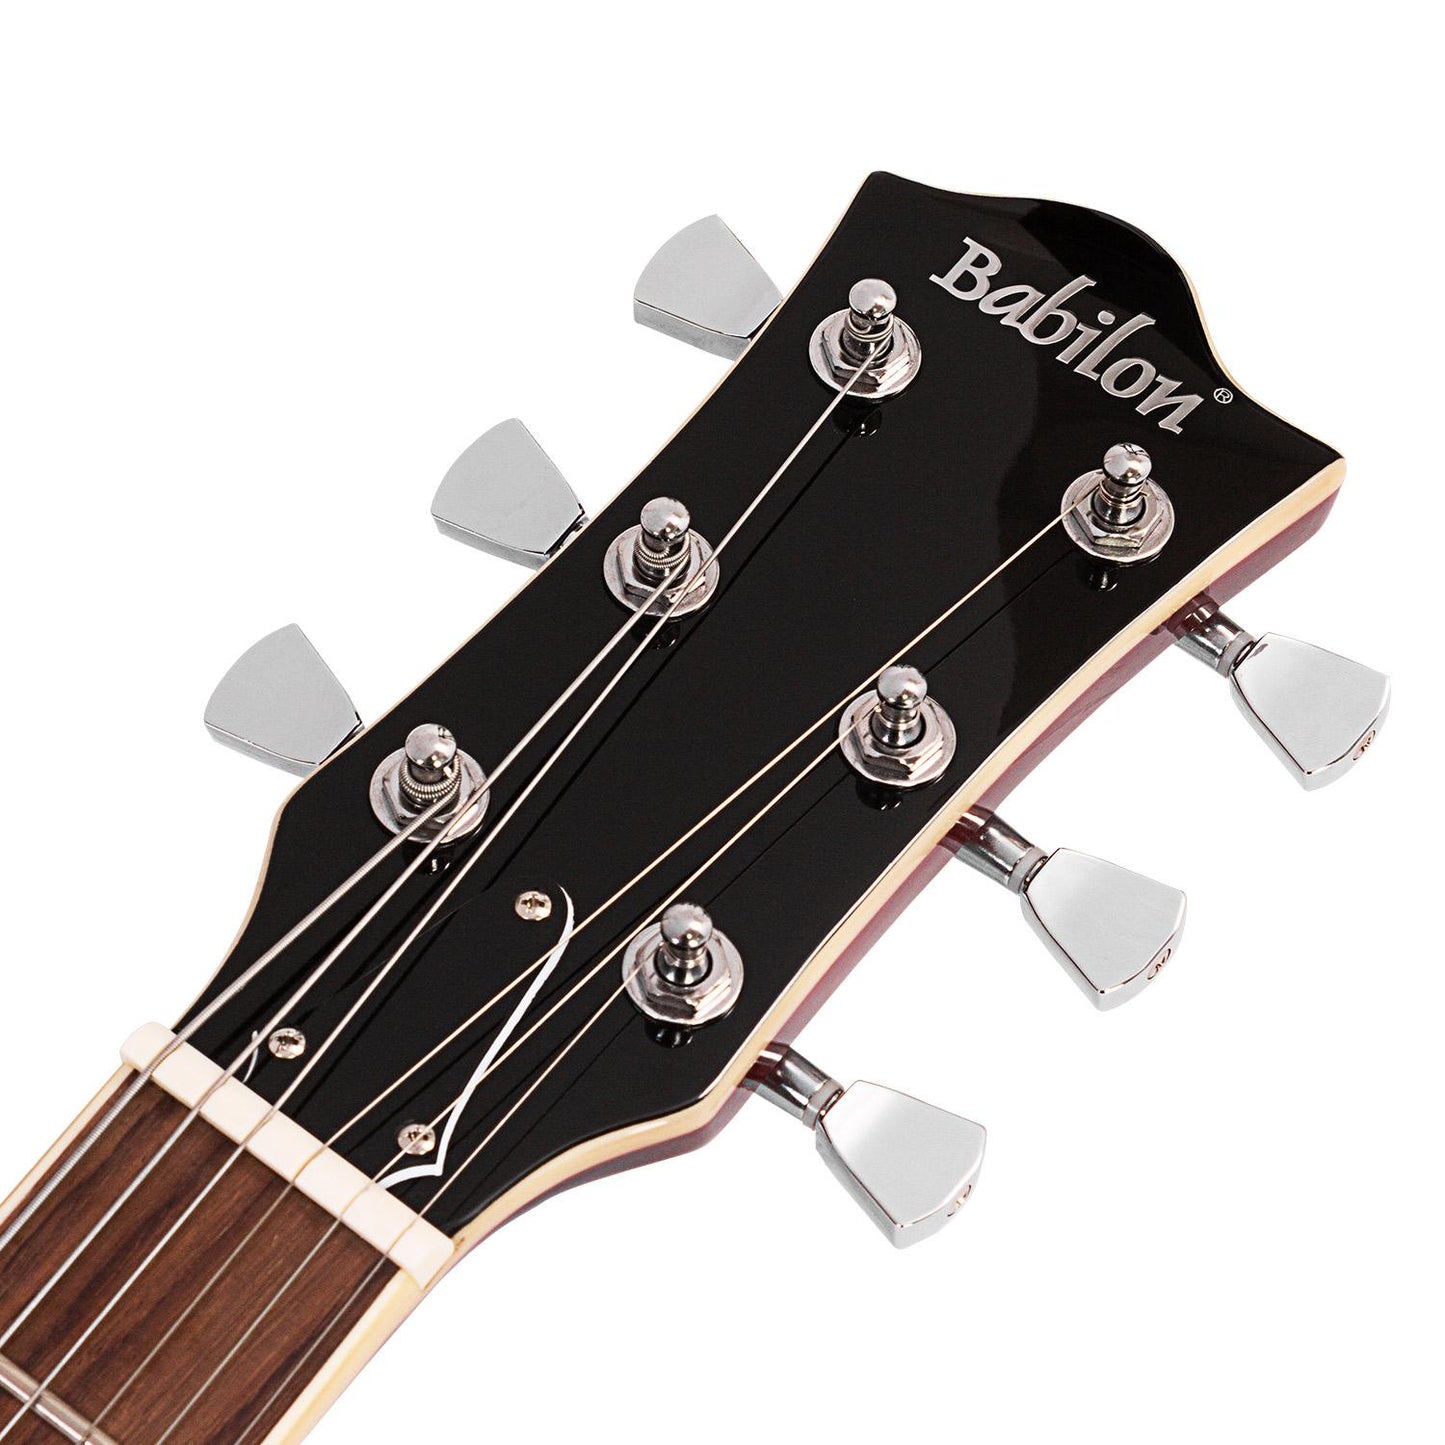 Guitarra Eléctrica con Case Serie Unique COSMOS-AM BABILON